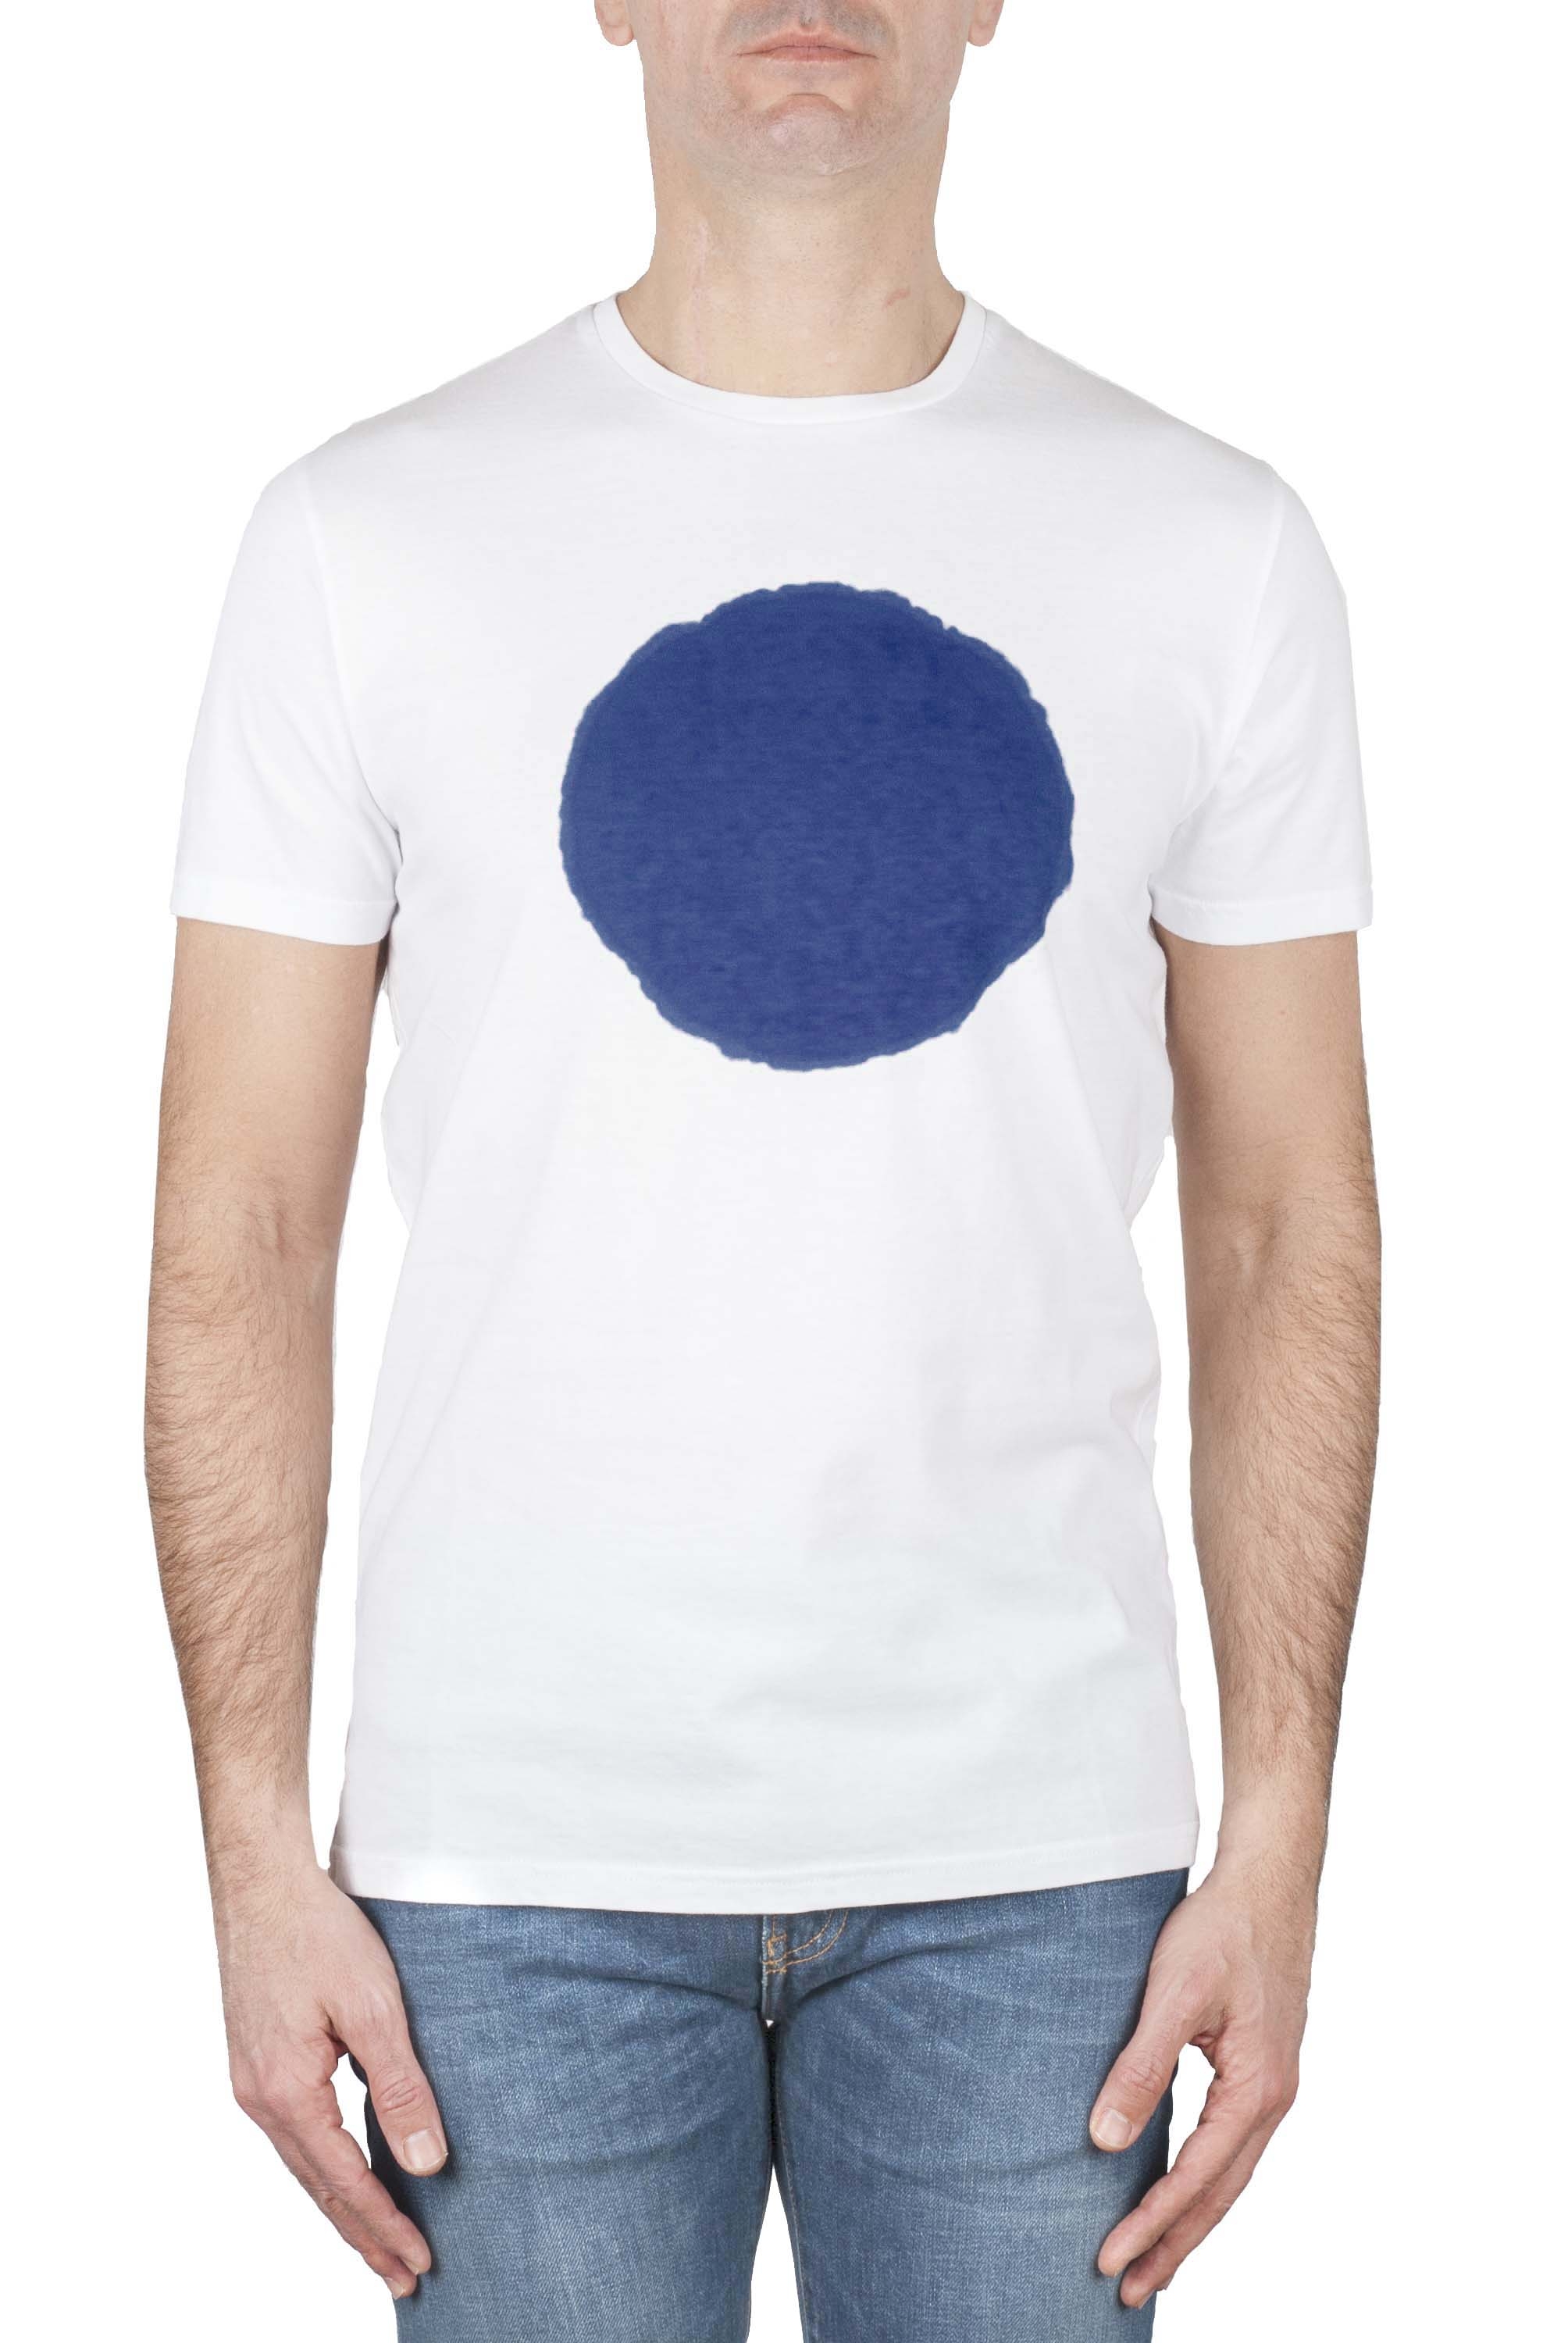 SBU 01167_19AW 青と白のグラフィックを印刷した古典的な半袖綿ラウンドネックtシャツ 01